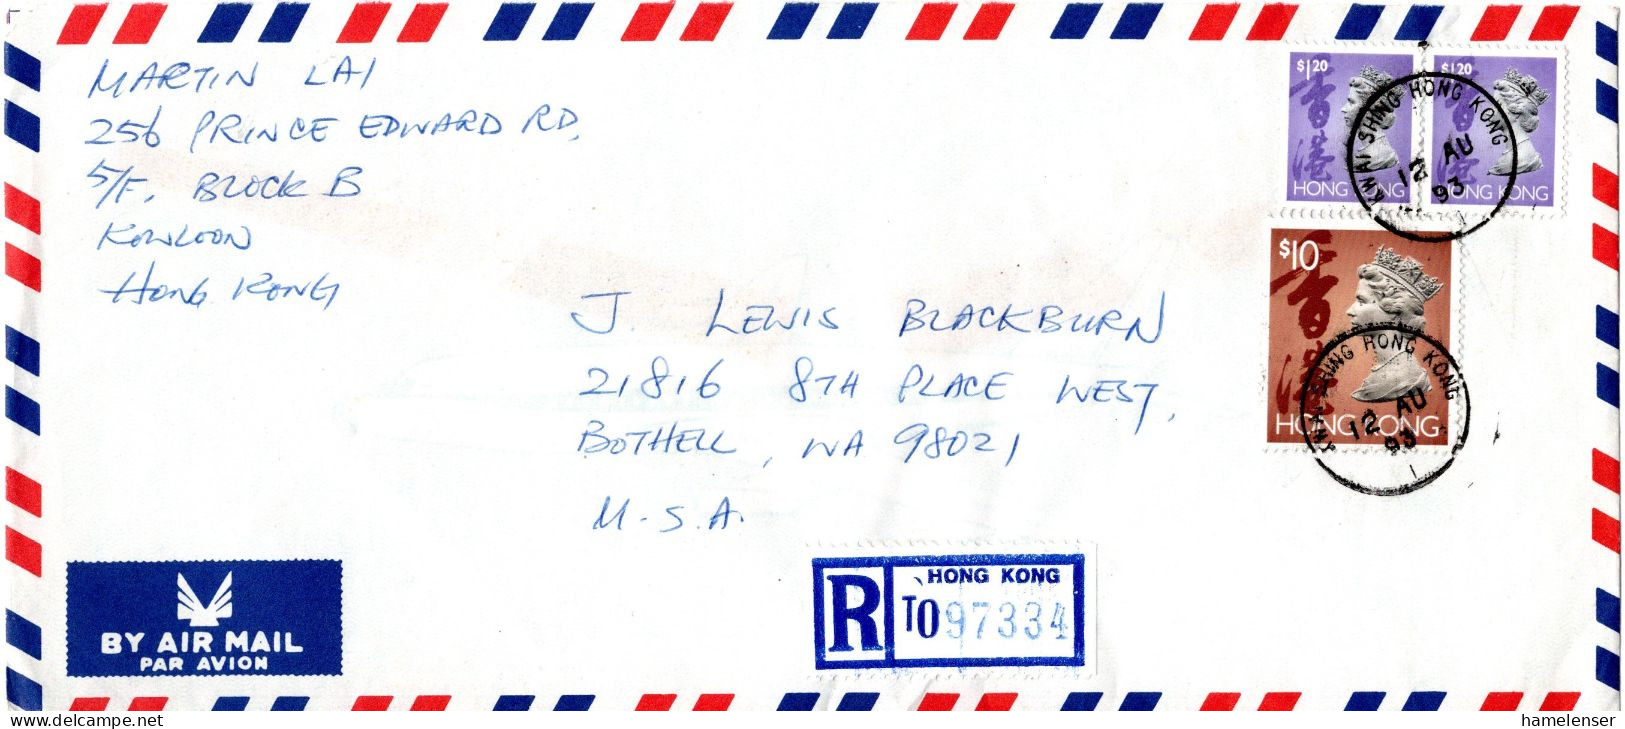 L76707 - Hong Kong - 1993 - $10 QEII MiF A R-LpBf KWAI SHING -> Bothell, WA (USA) - Storia Postale